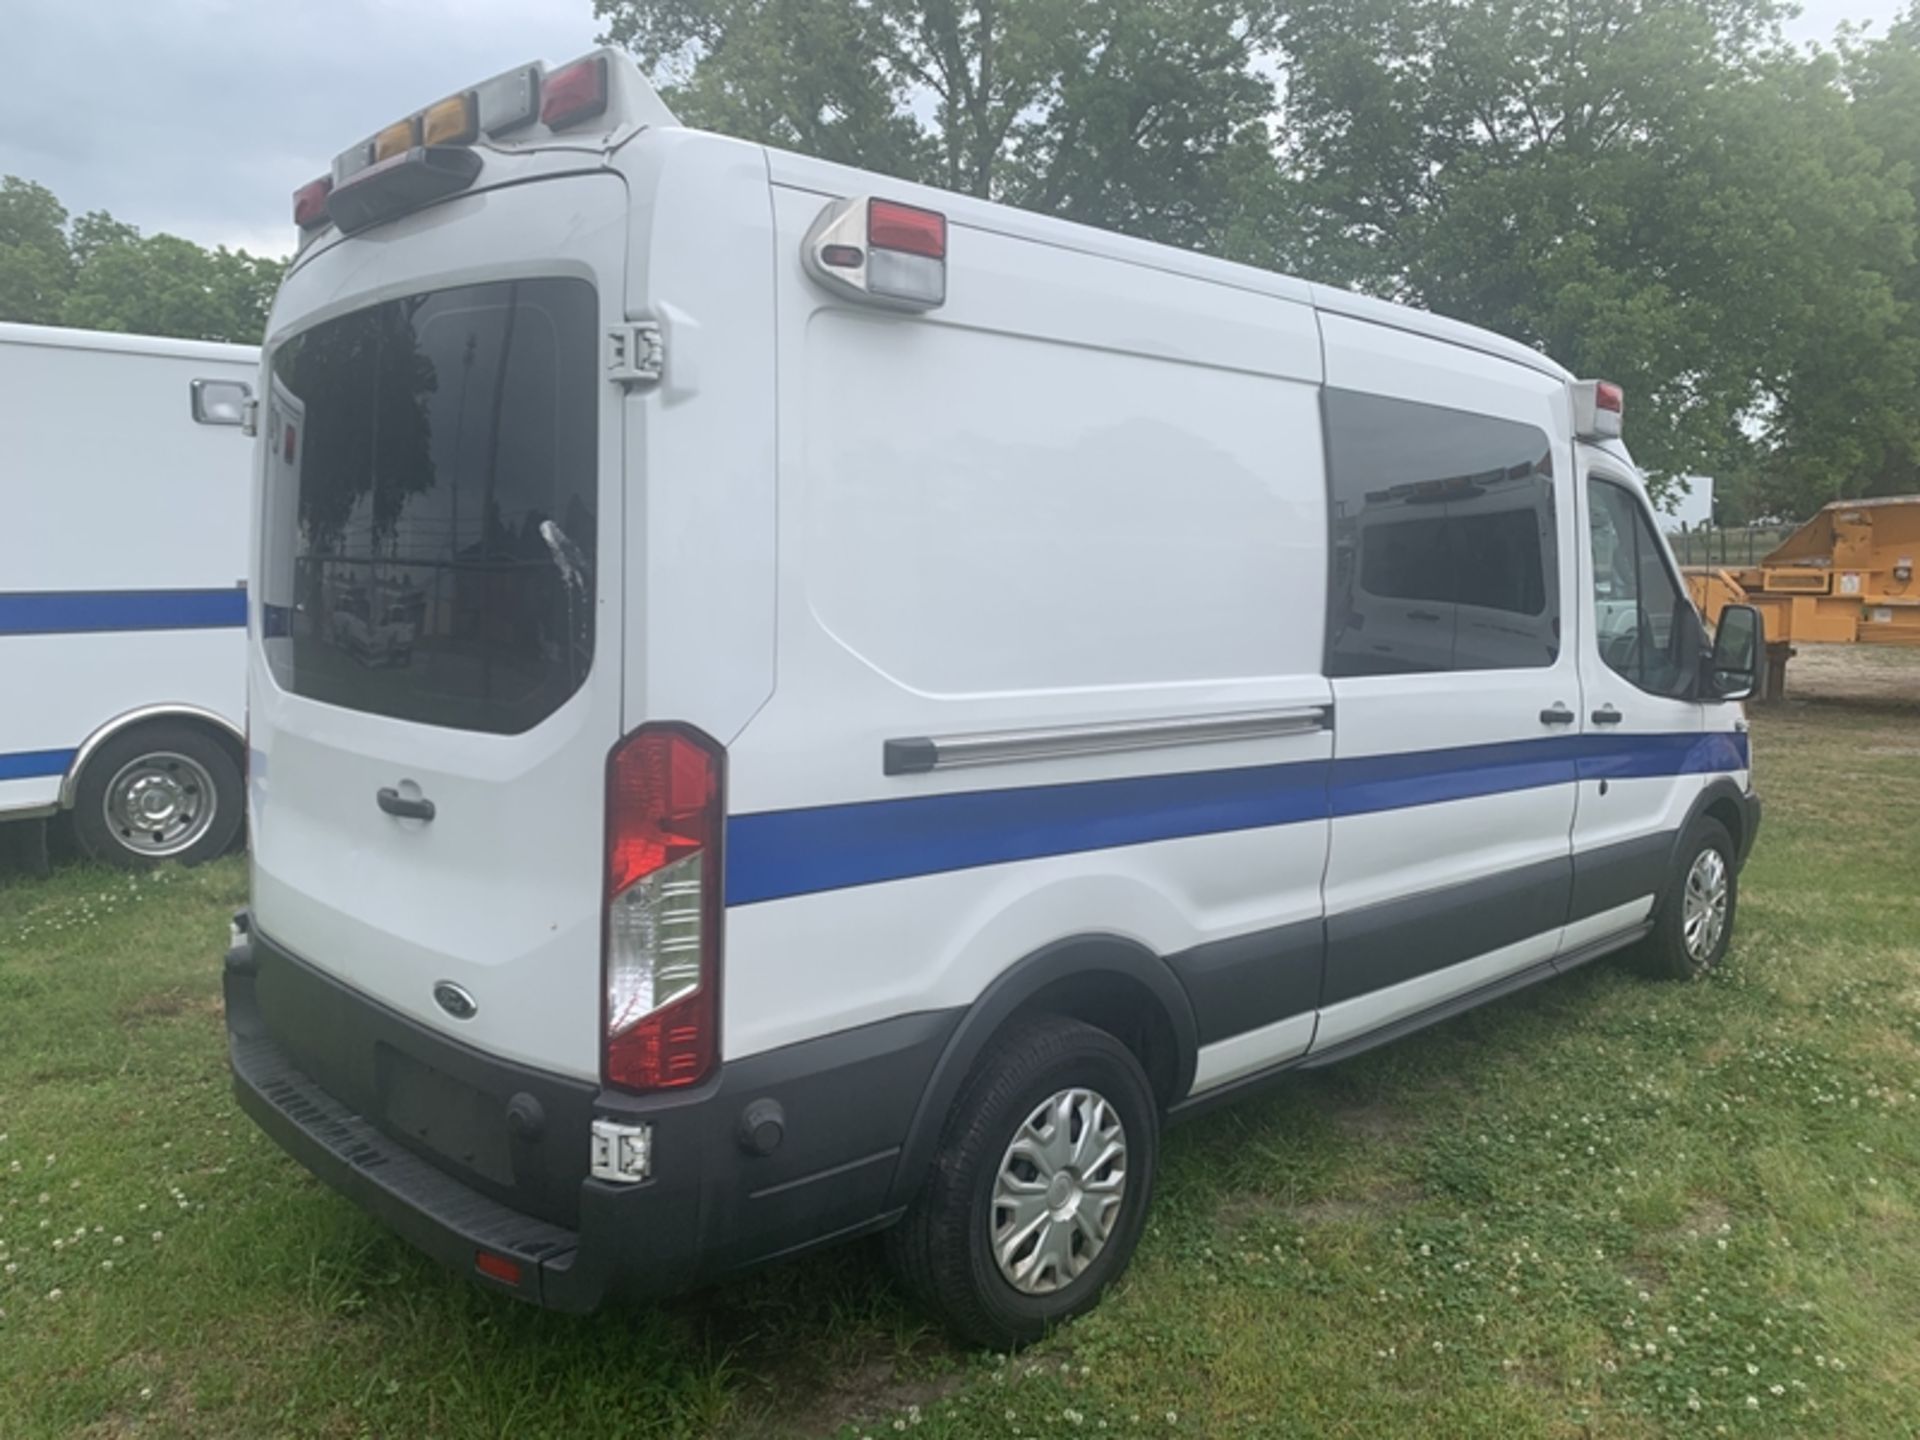 2018 FORD Transit 350 Sprinter Van, Type II Ambulance, 3.2L dsl - 203,339 miles - VIN: - Image 3 of 6